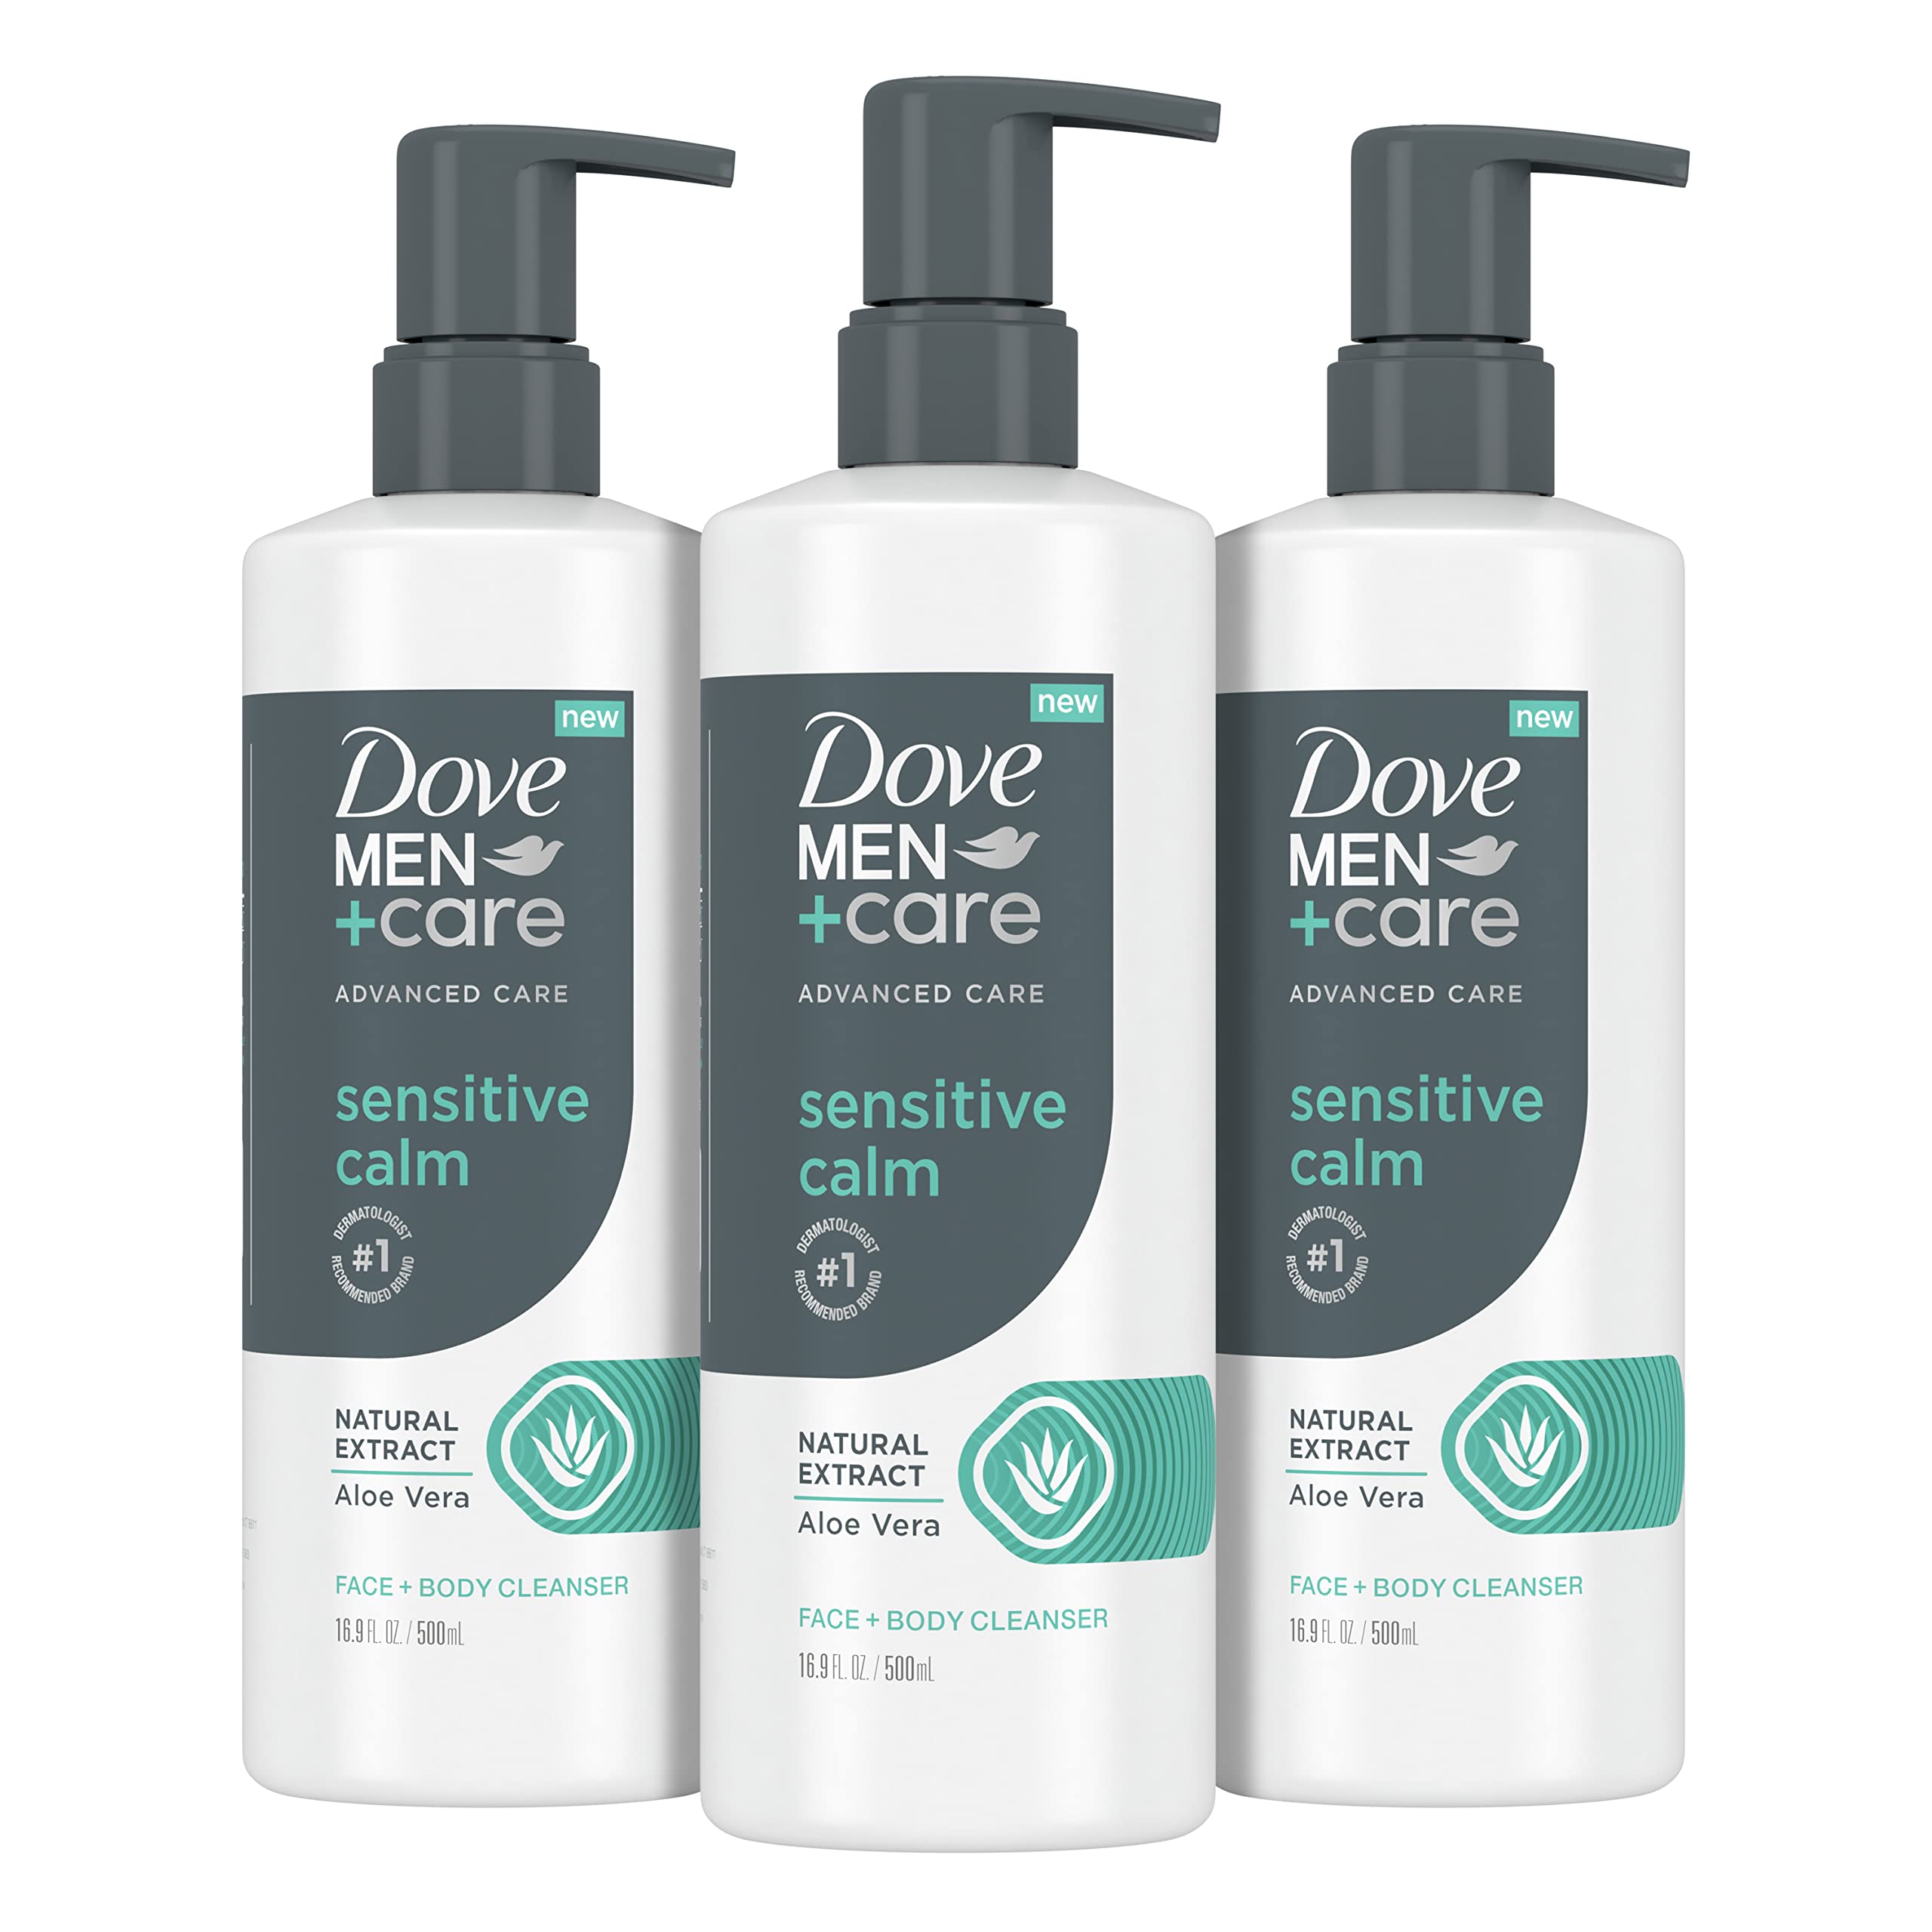 3-Count 16.9-Oz Dove MEN + CARE Advanced Care Face + Body Cleanser Wash (Sensitive Calm) $7.17 ($2.39 Ea) w/ S&S + Free Shipping w/ Prime or on $35+